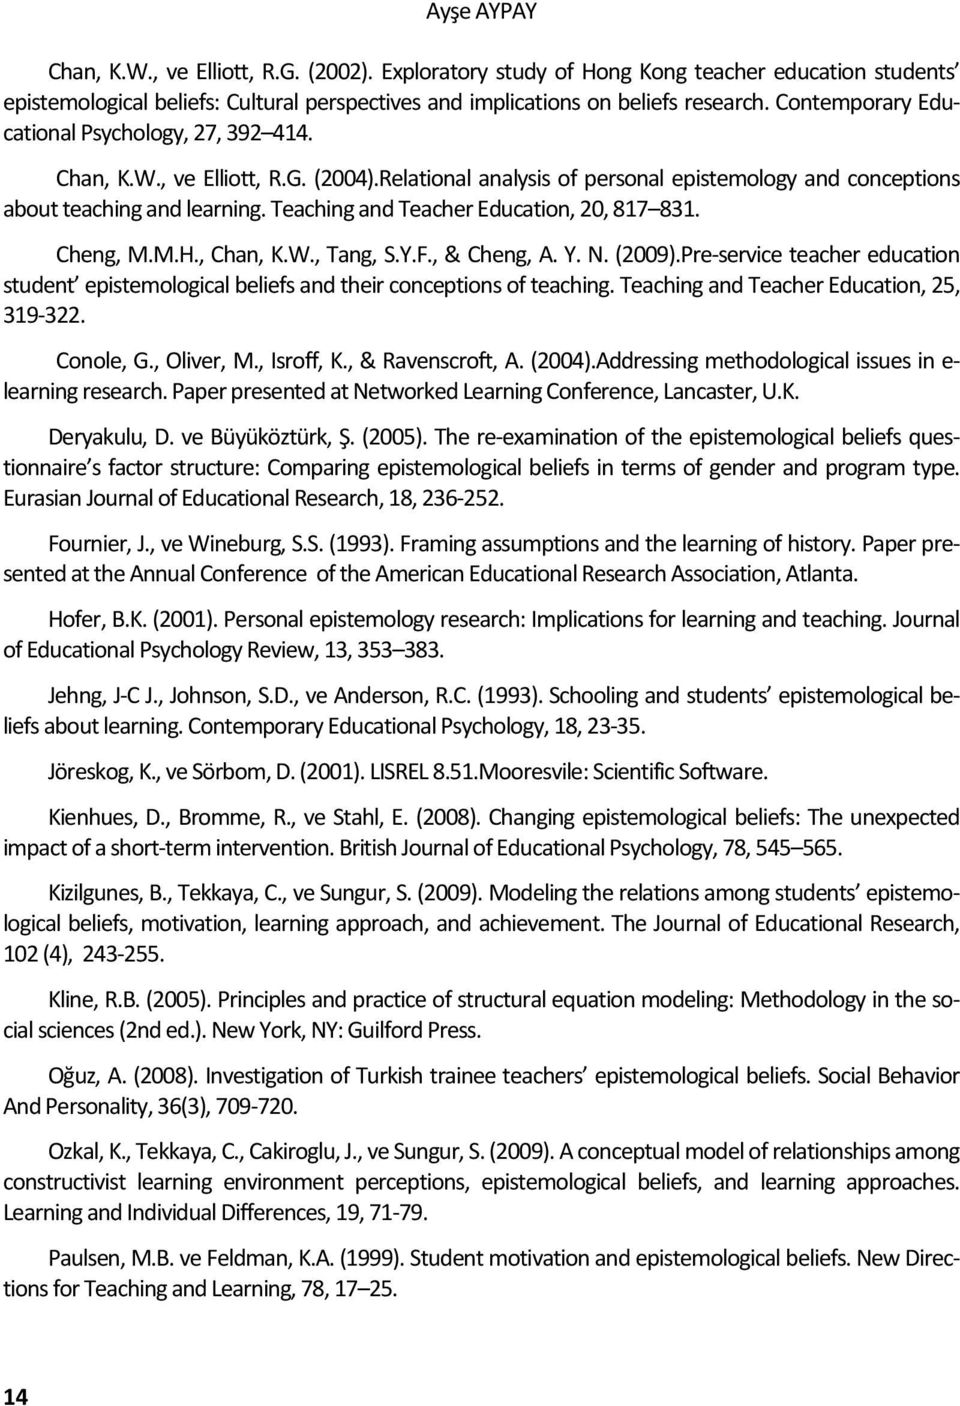 Teaching and Teacher Education, 20, 87 83. Cheng, M.M.H., Chan, K.W., Tang, S.Y.F., & Cheng, A. Y. N. (2009).